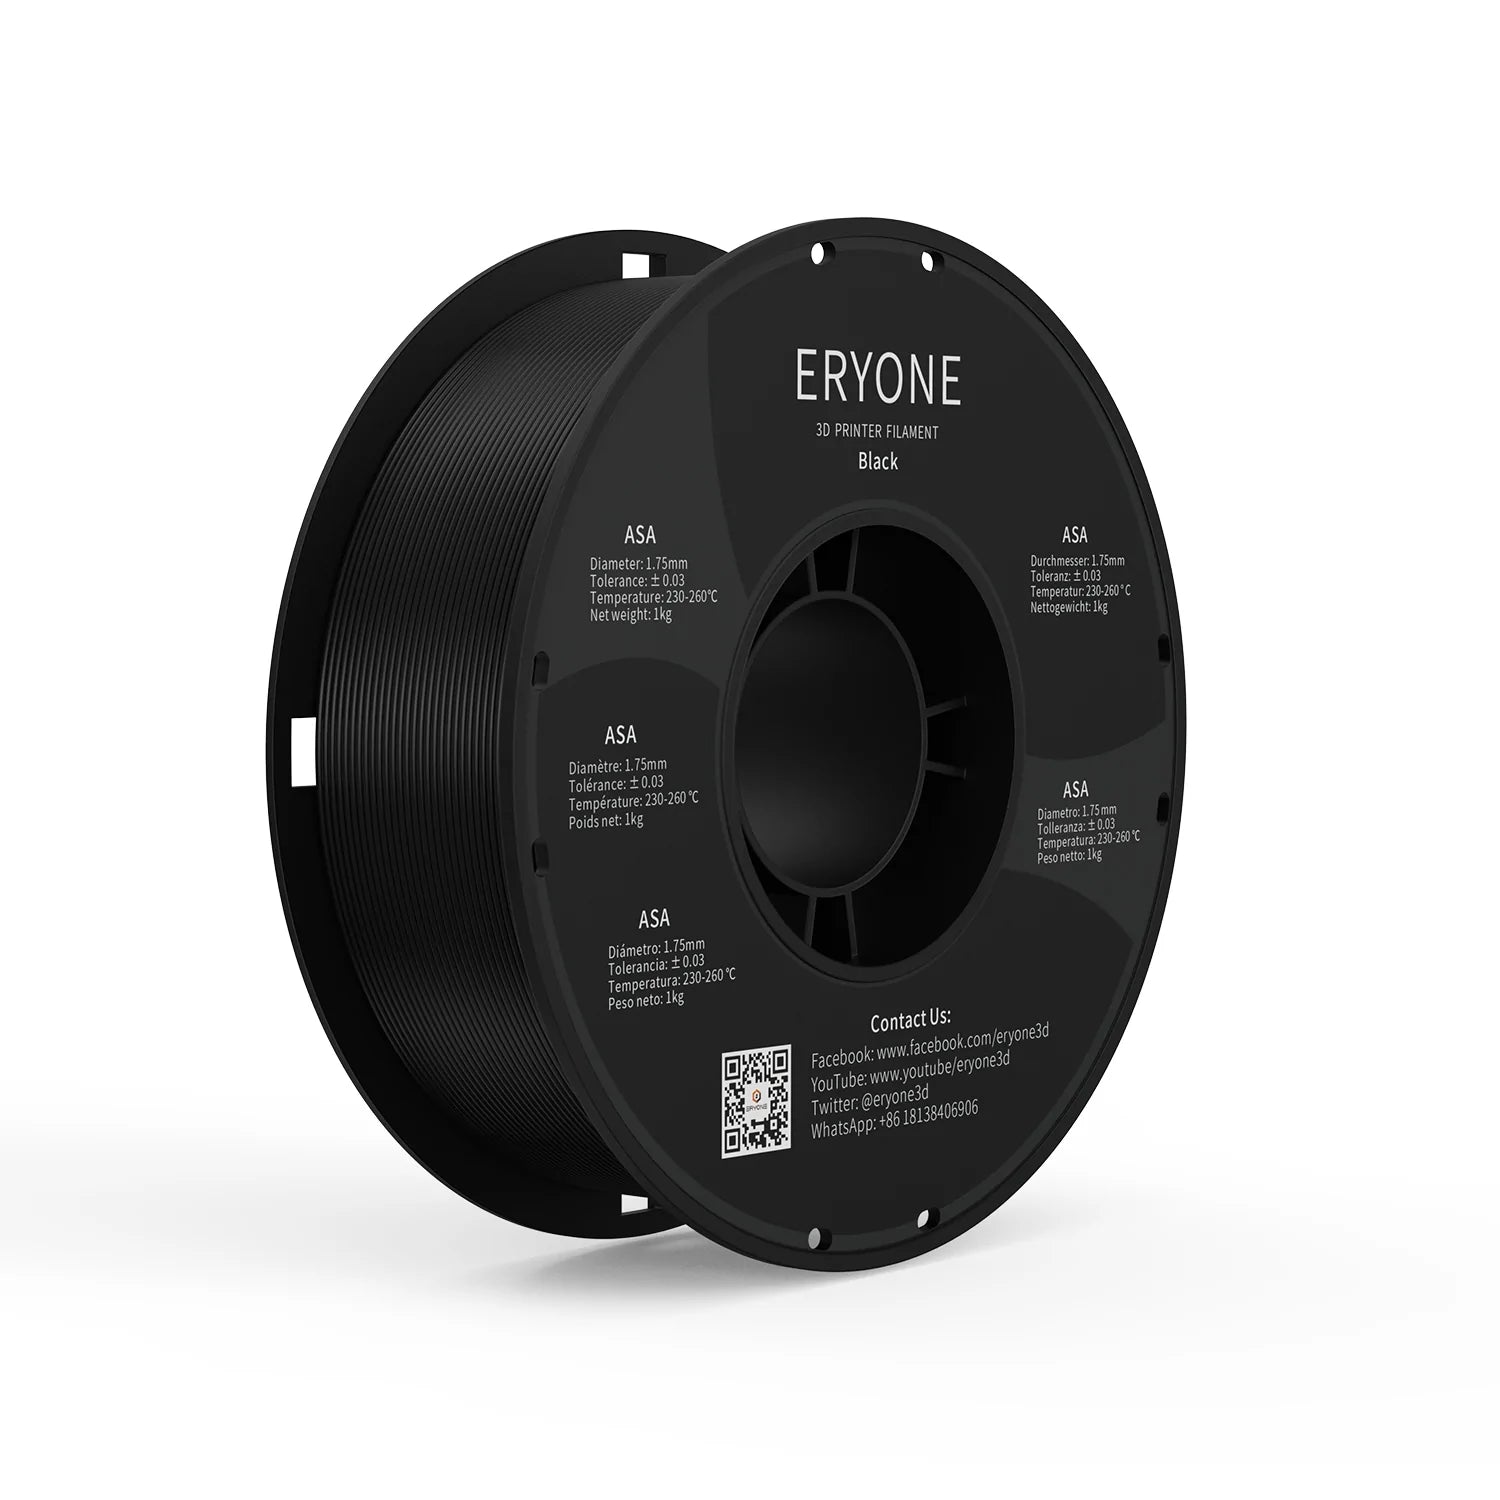 ERYONE ASA 3D Printer Filament 1.75mm, Dimensional Accuracy +/- 0.05mm, 1kg (2.2 LBS)/Spool